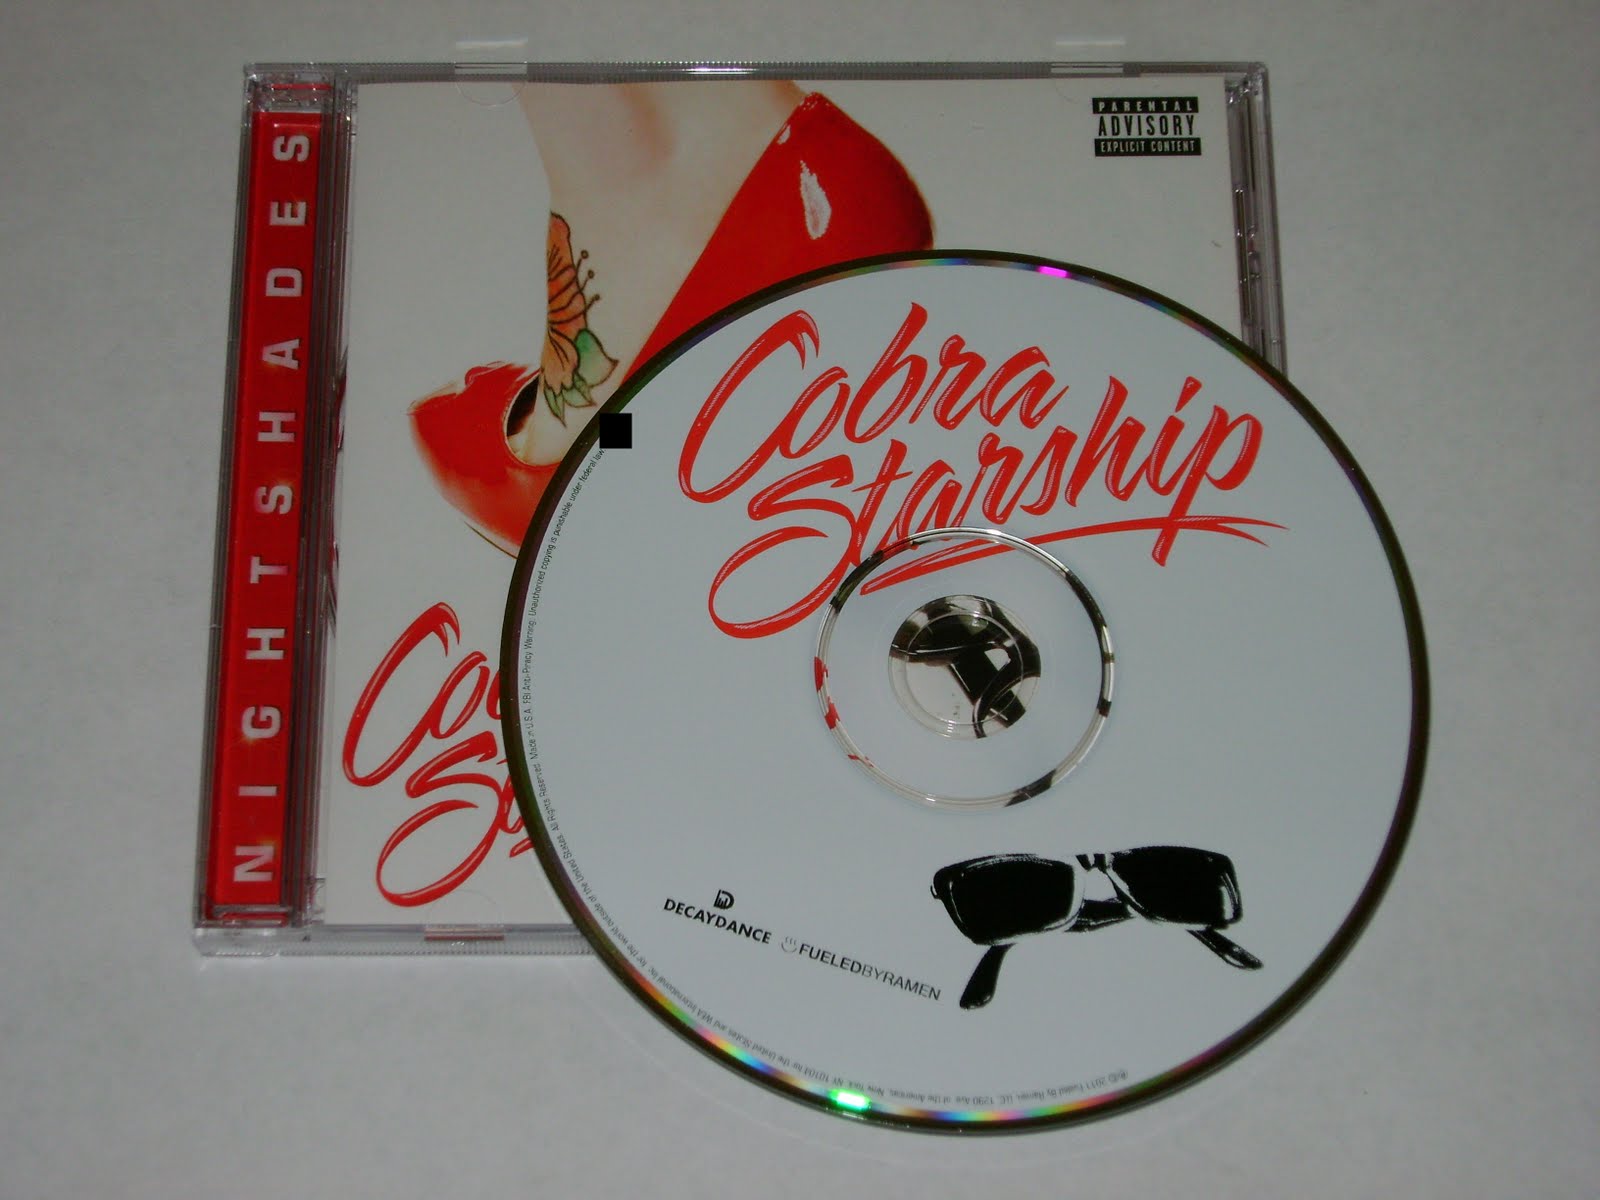 Cobra+starship+2011+album